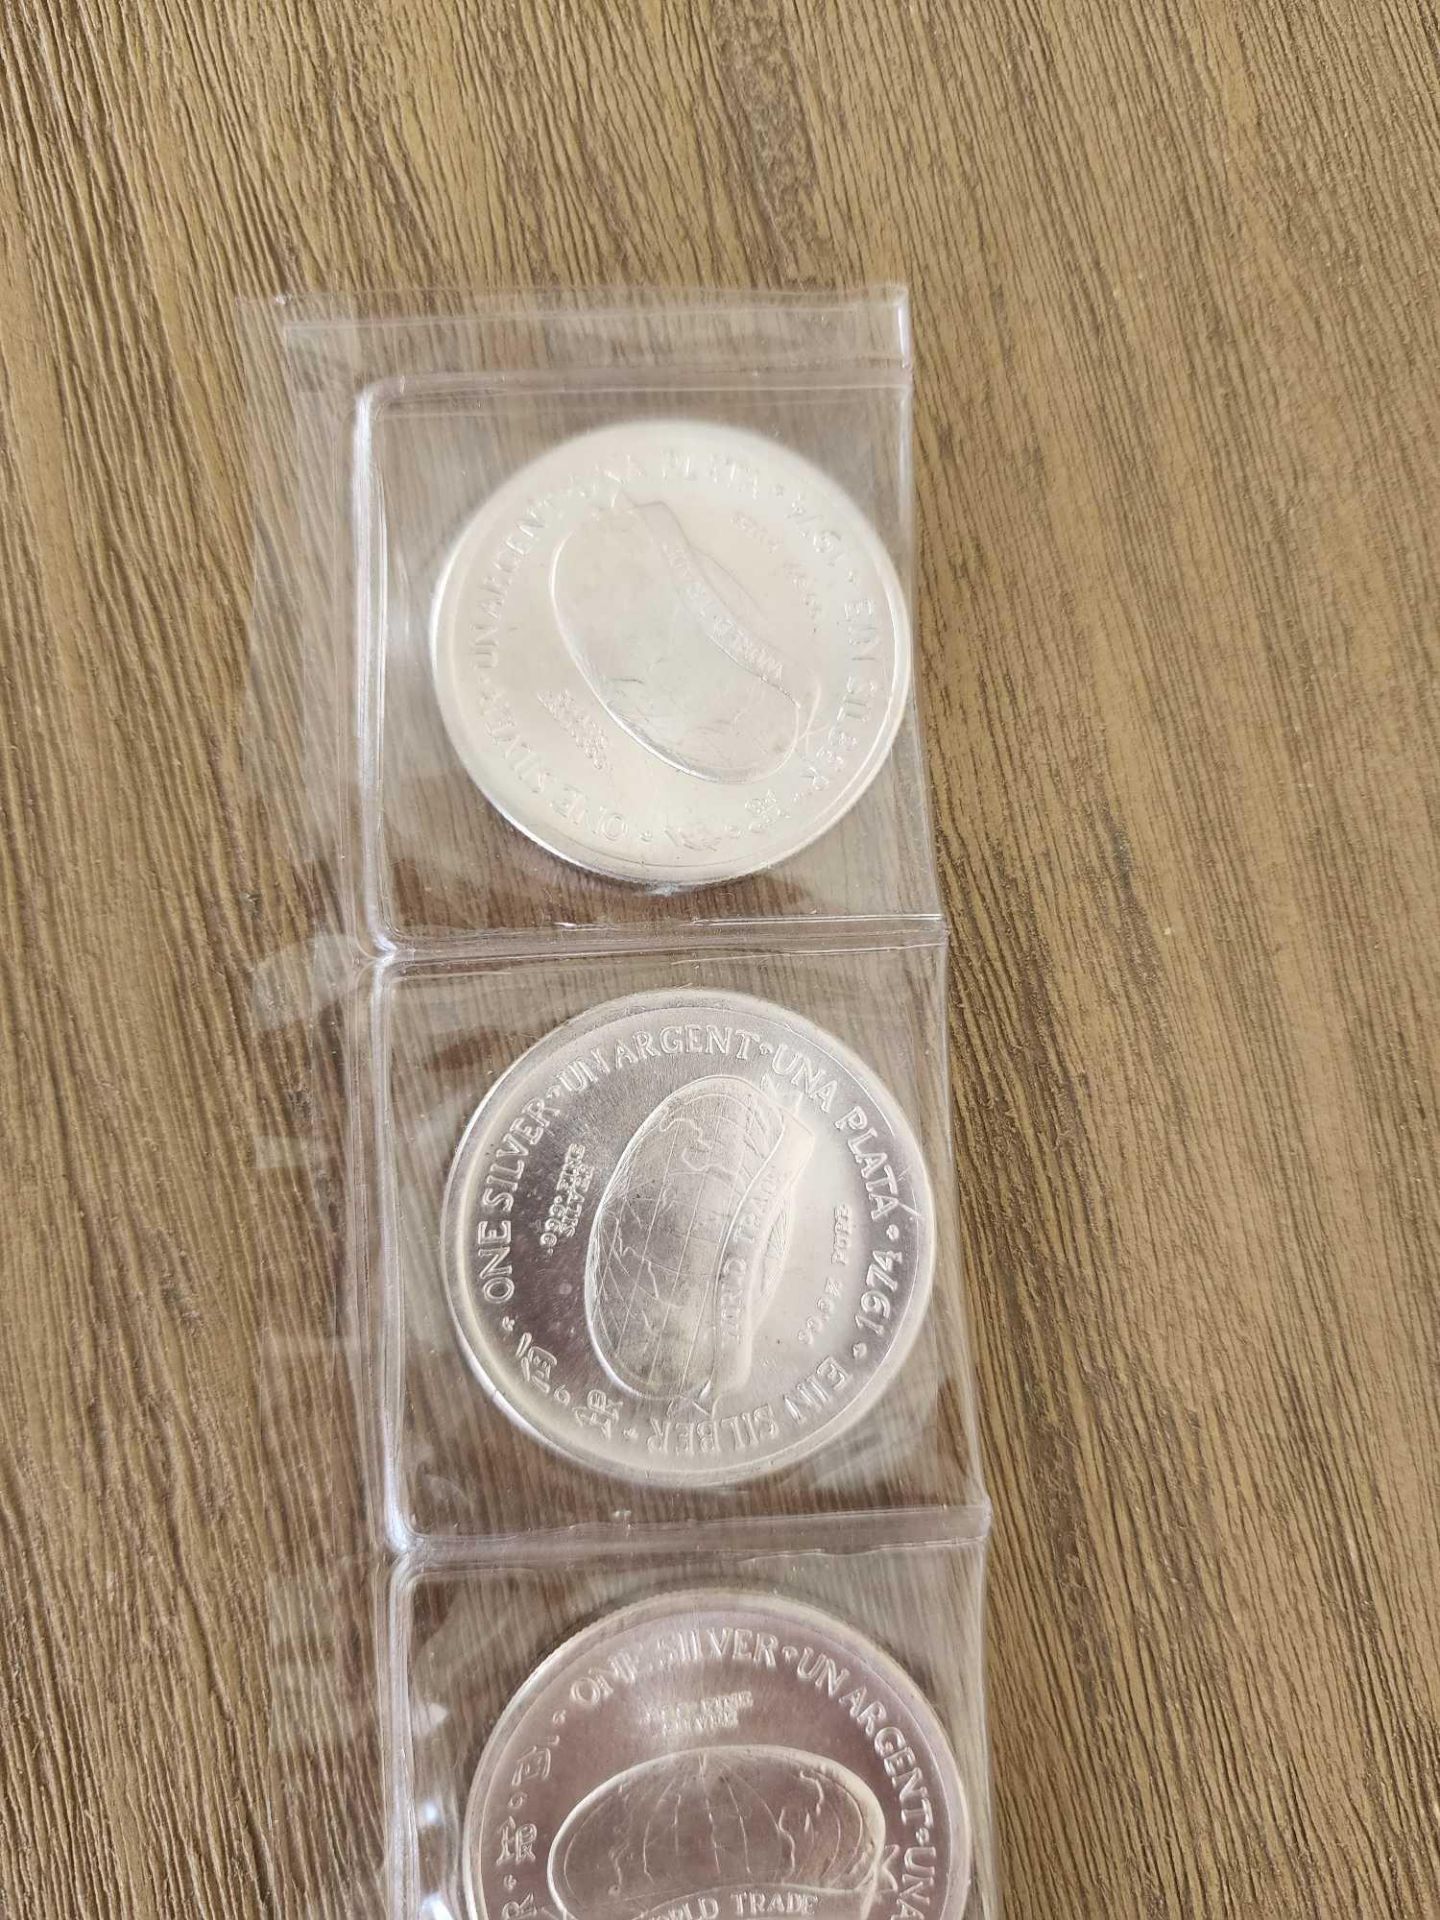 5 World Trade International Silver Vintage Silver Coins 1 oz Coins